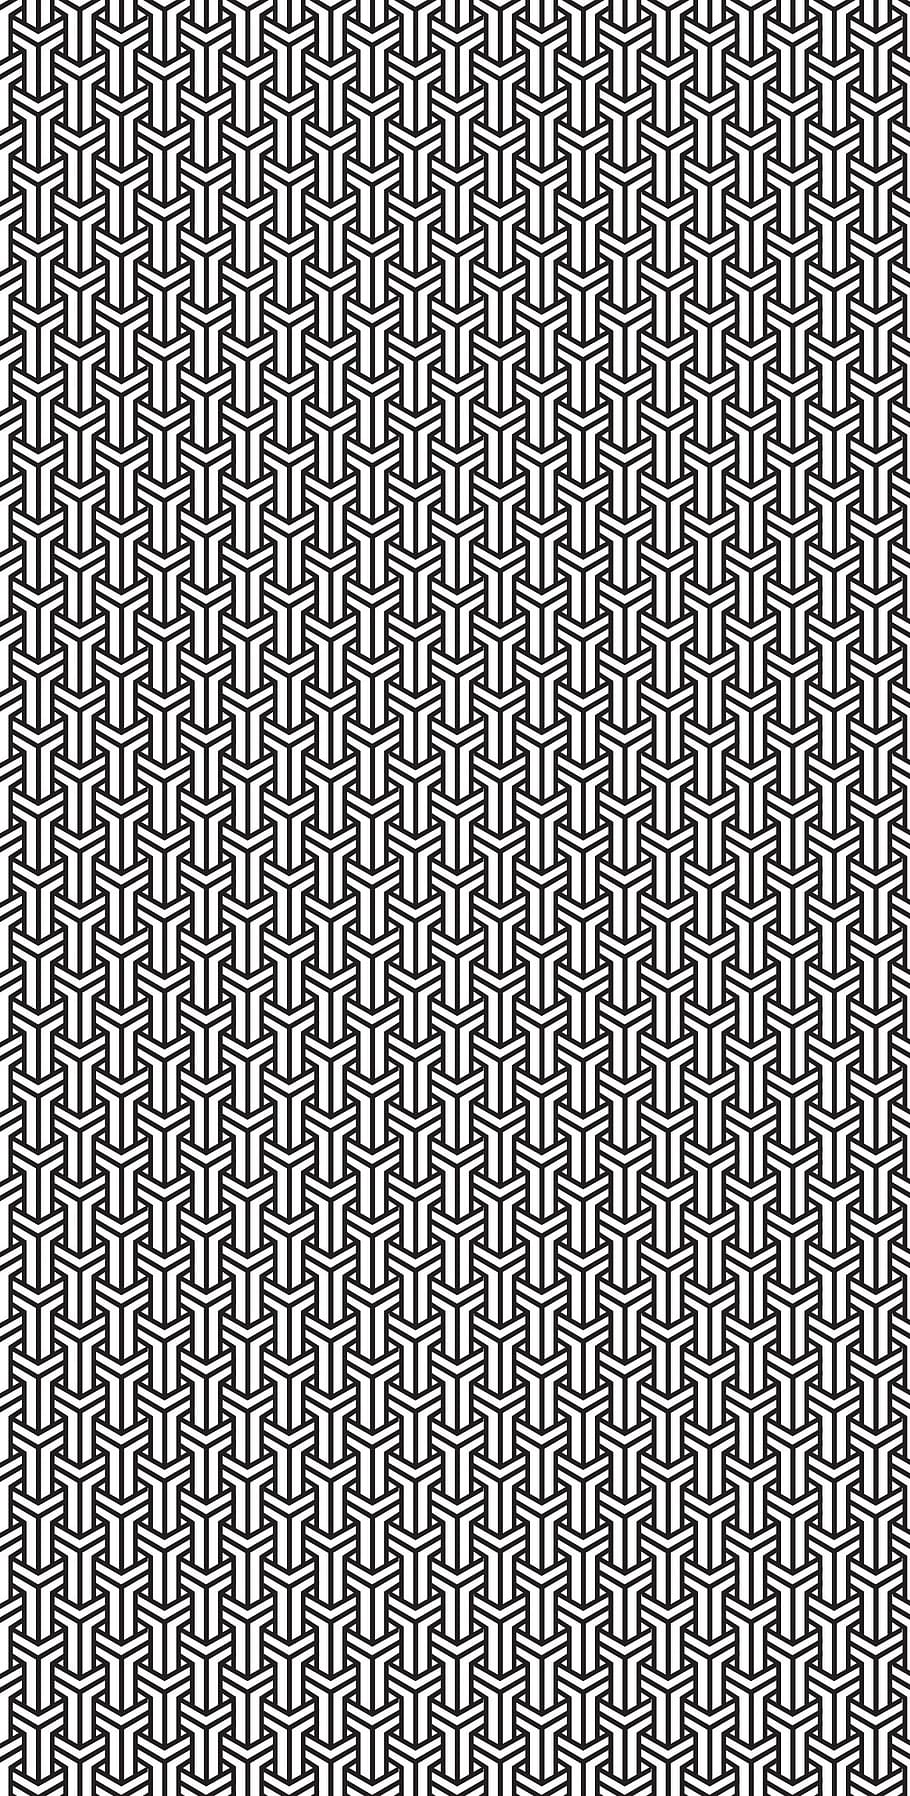 pattern, black, white, tile, interlocking, design, geometric, repeat, shape, symmetry